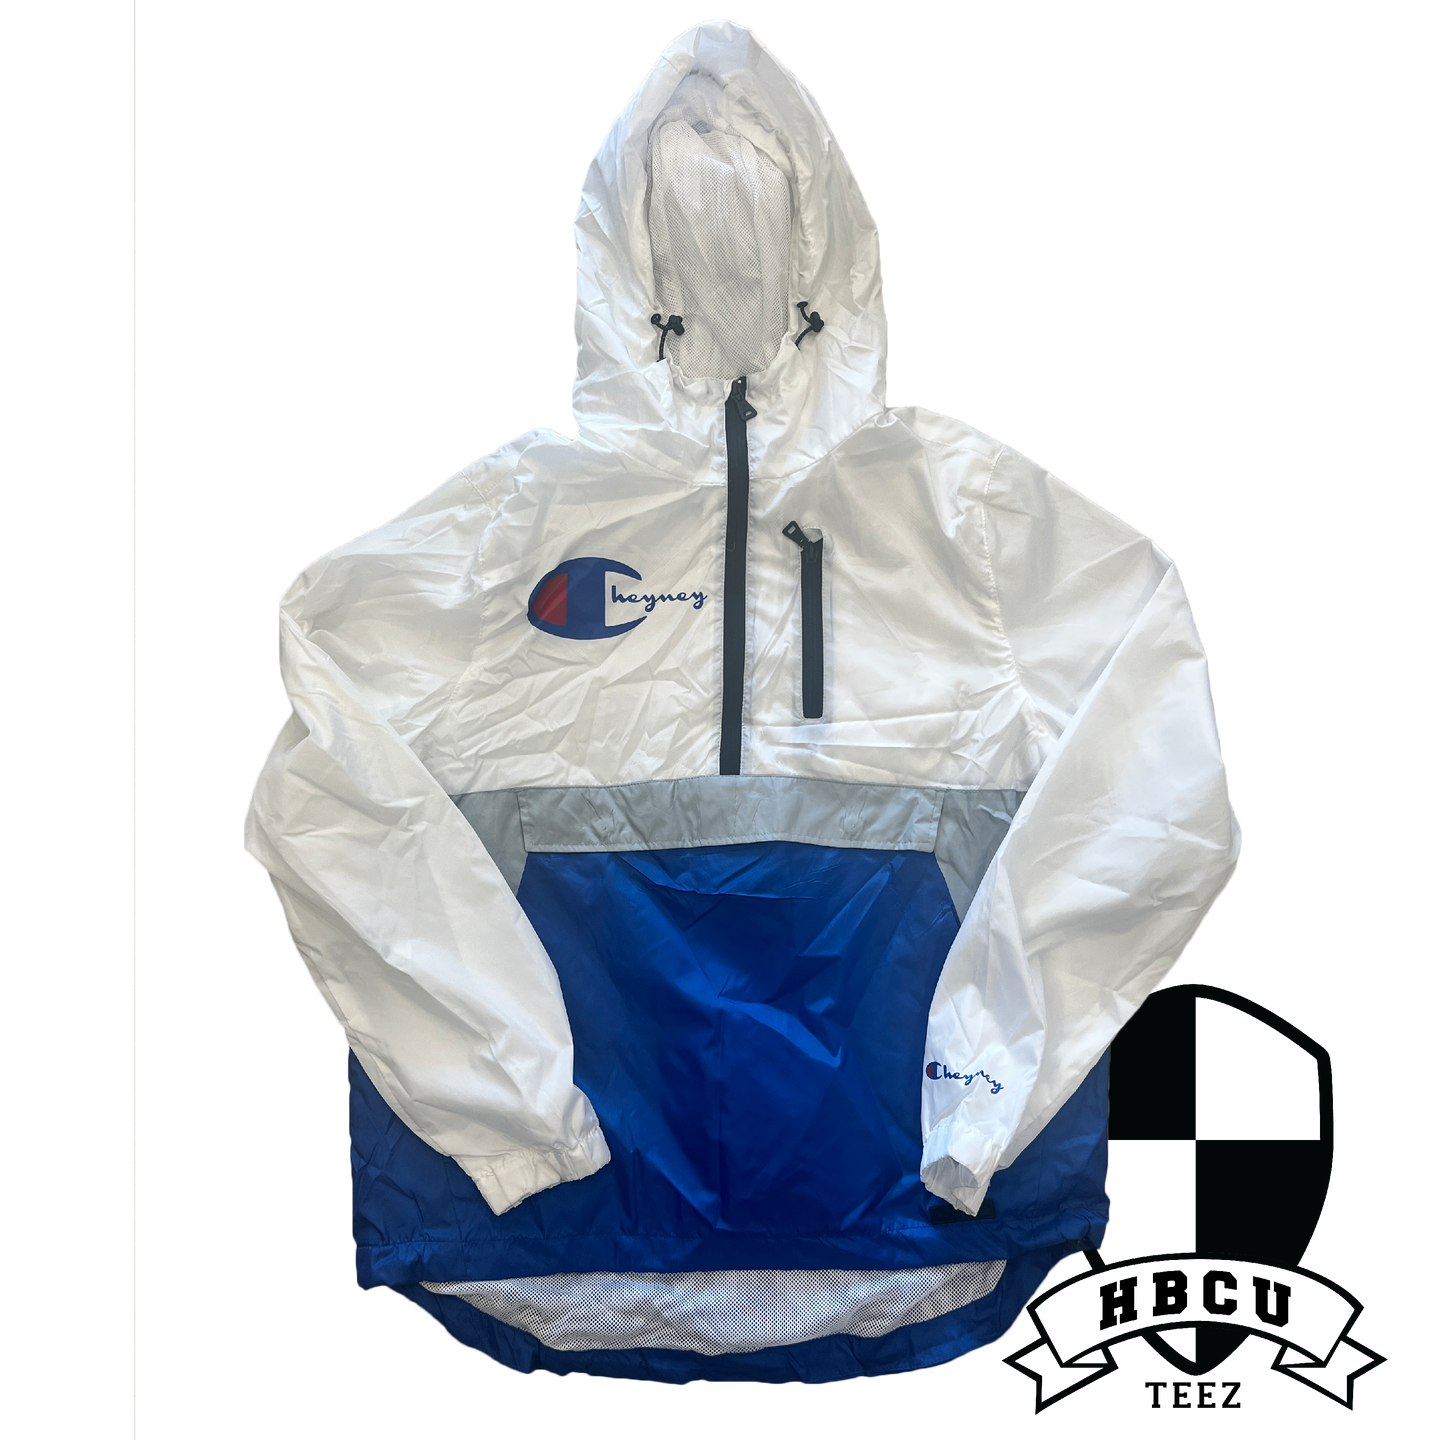 Cheyney Champion Wind Breaker Jacket White